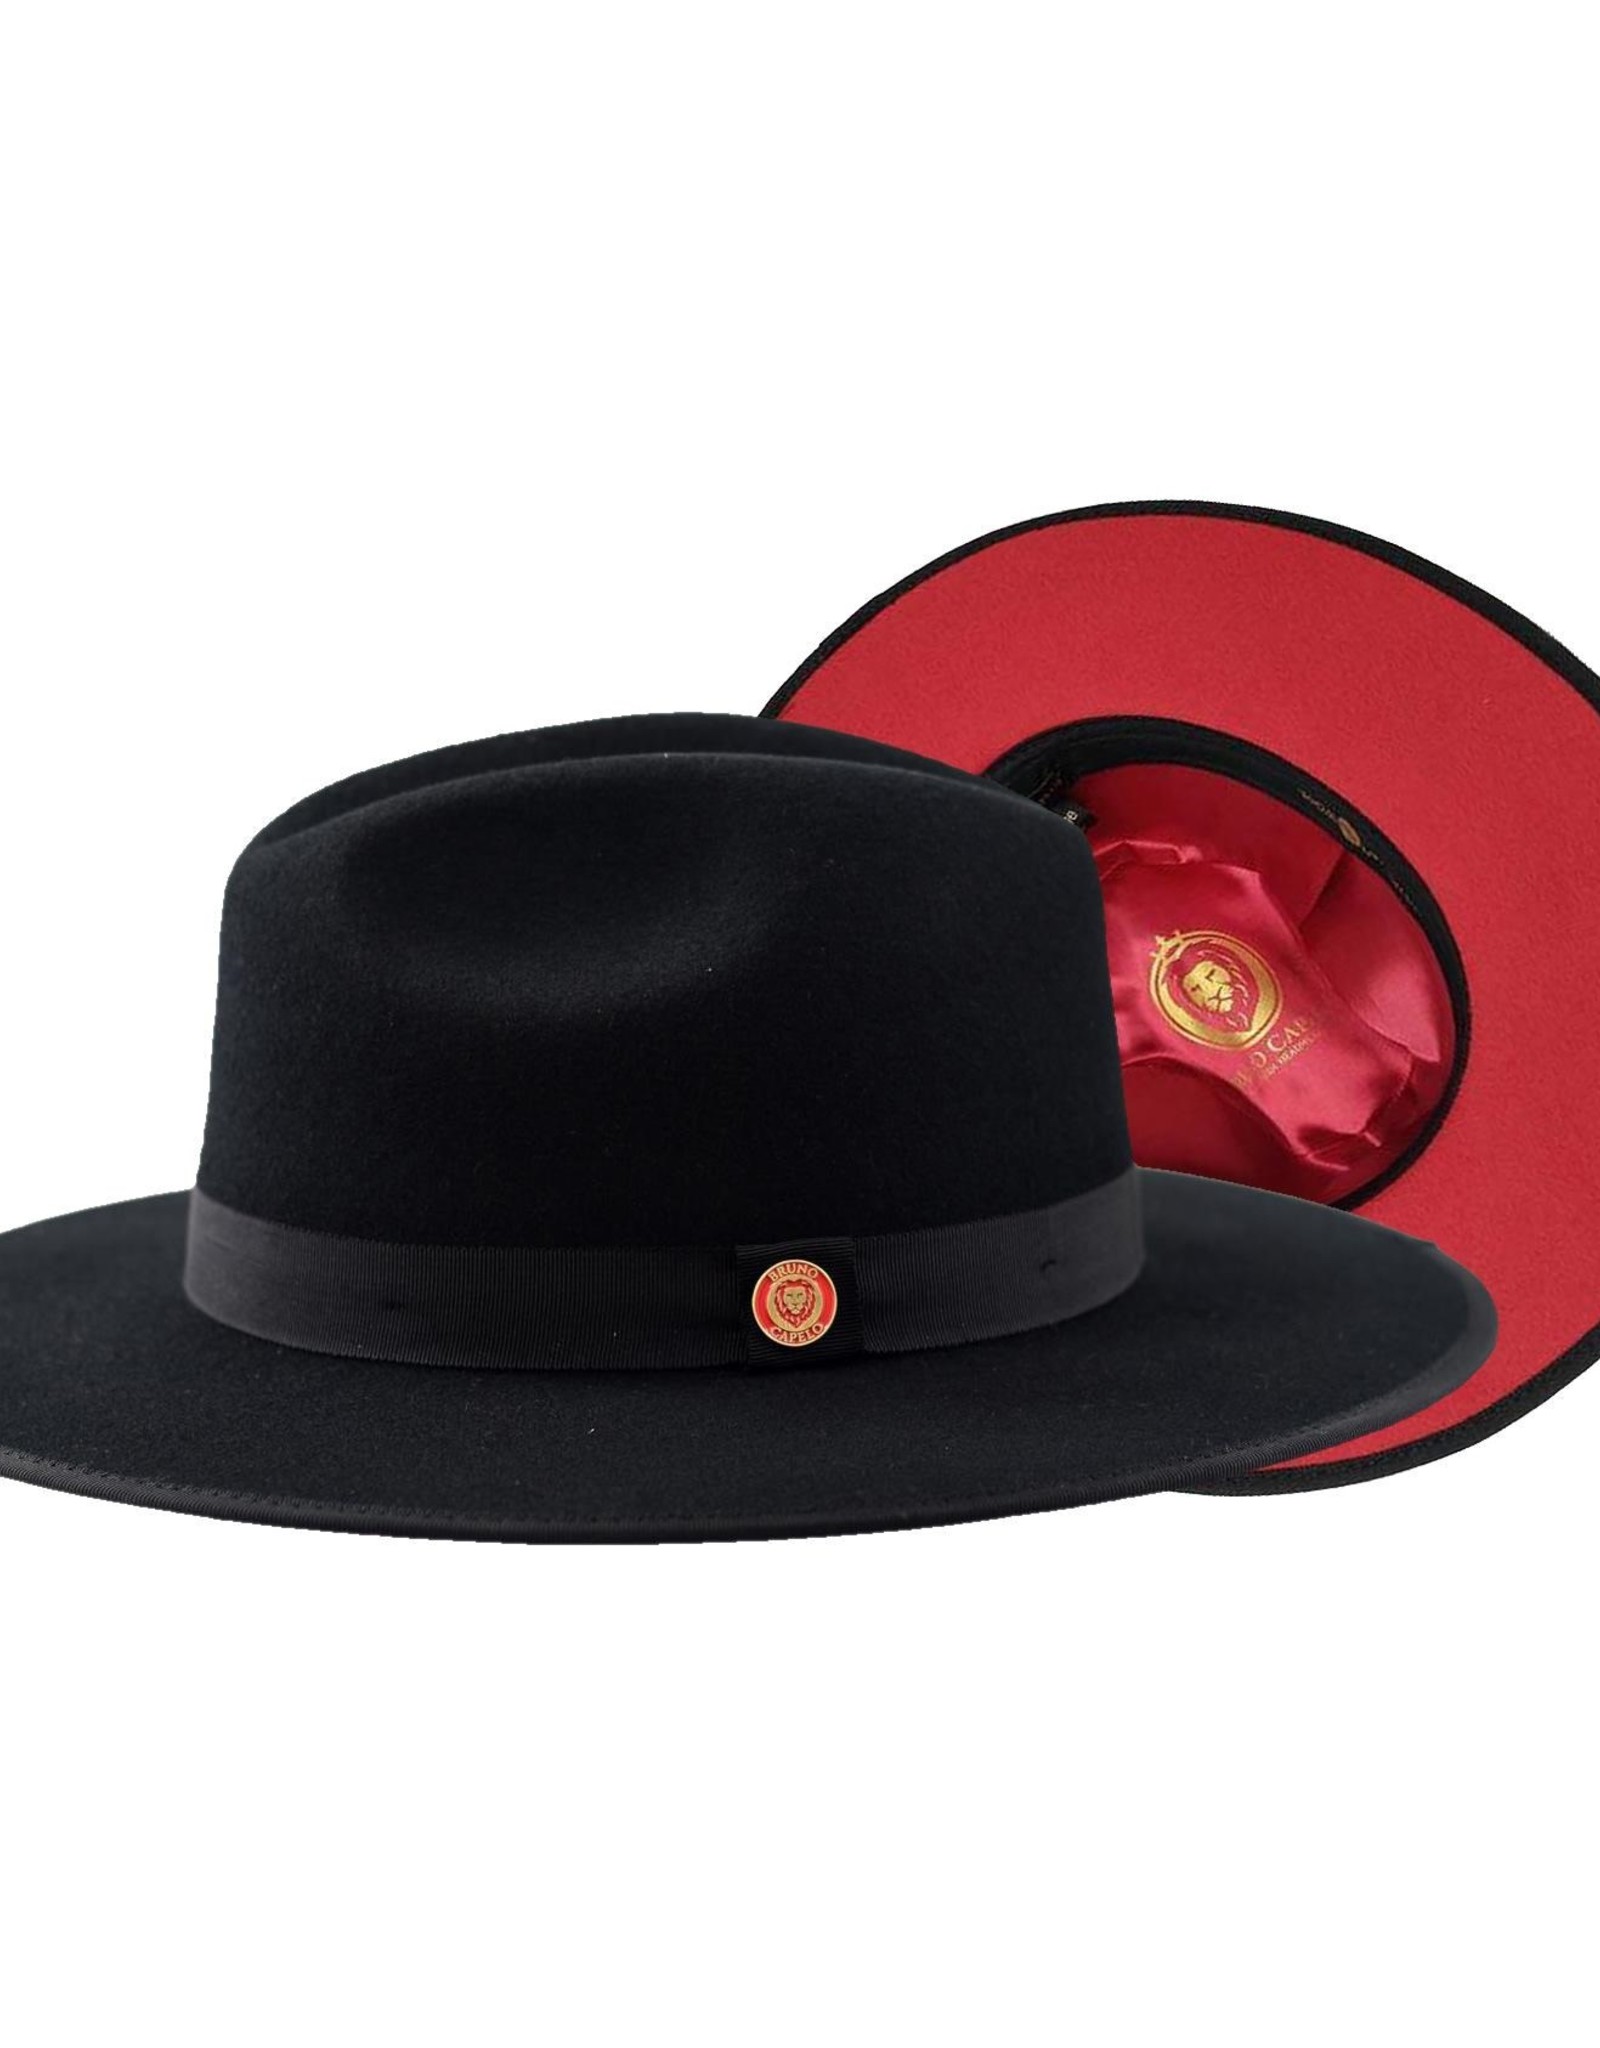 Hat Fedro Monarch Brim 3in Black/Red